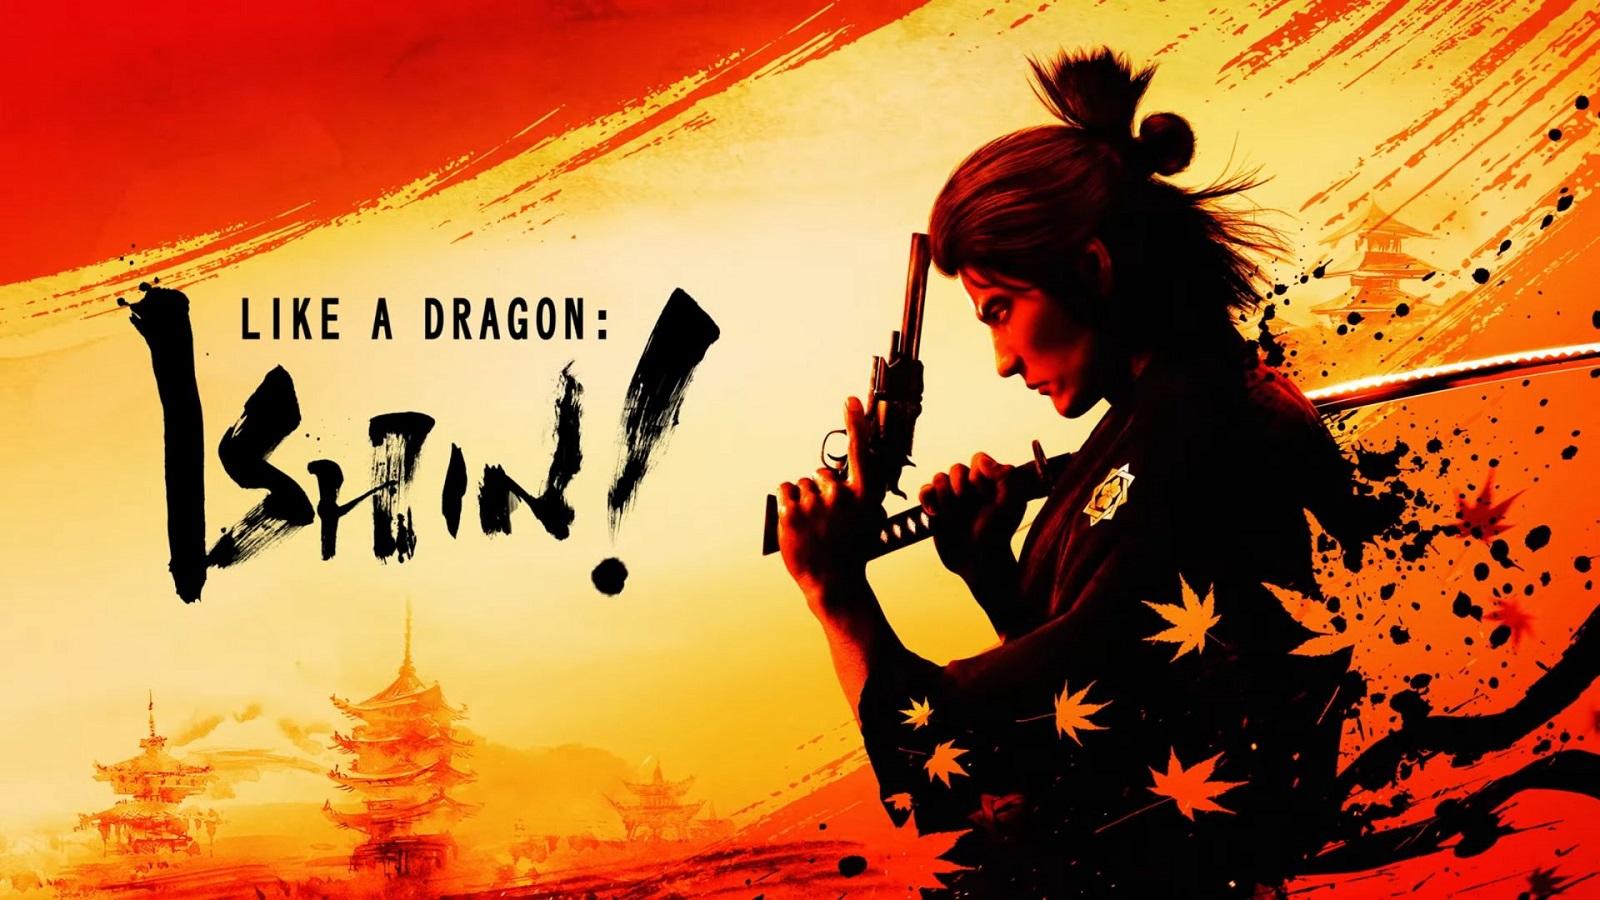 Like a Dragon: Ishin official artwork